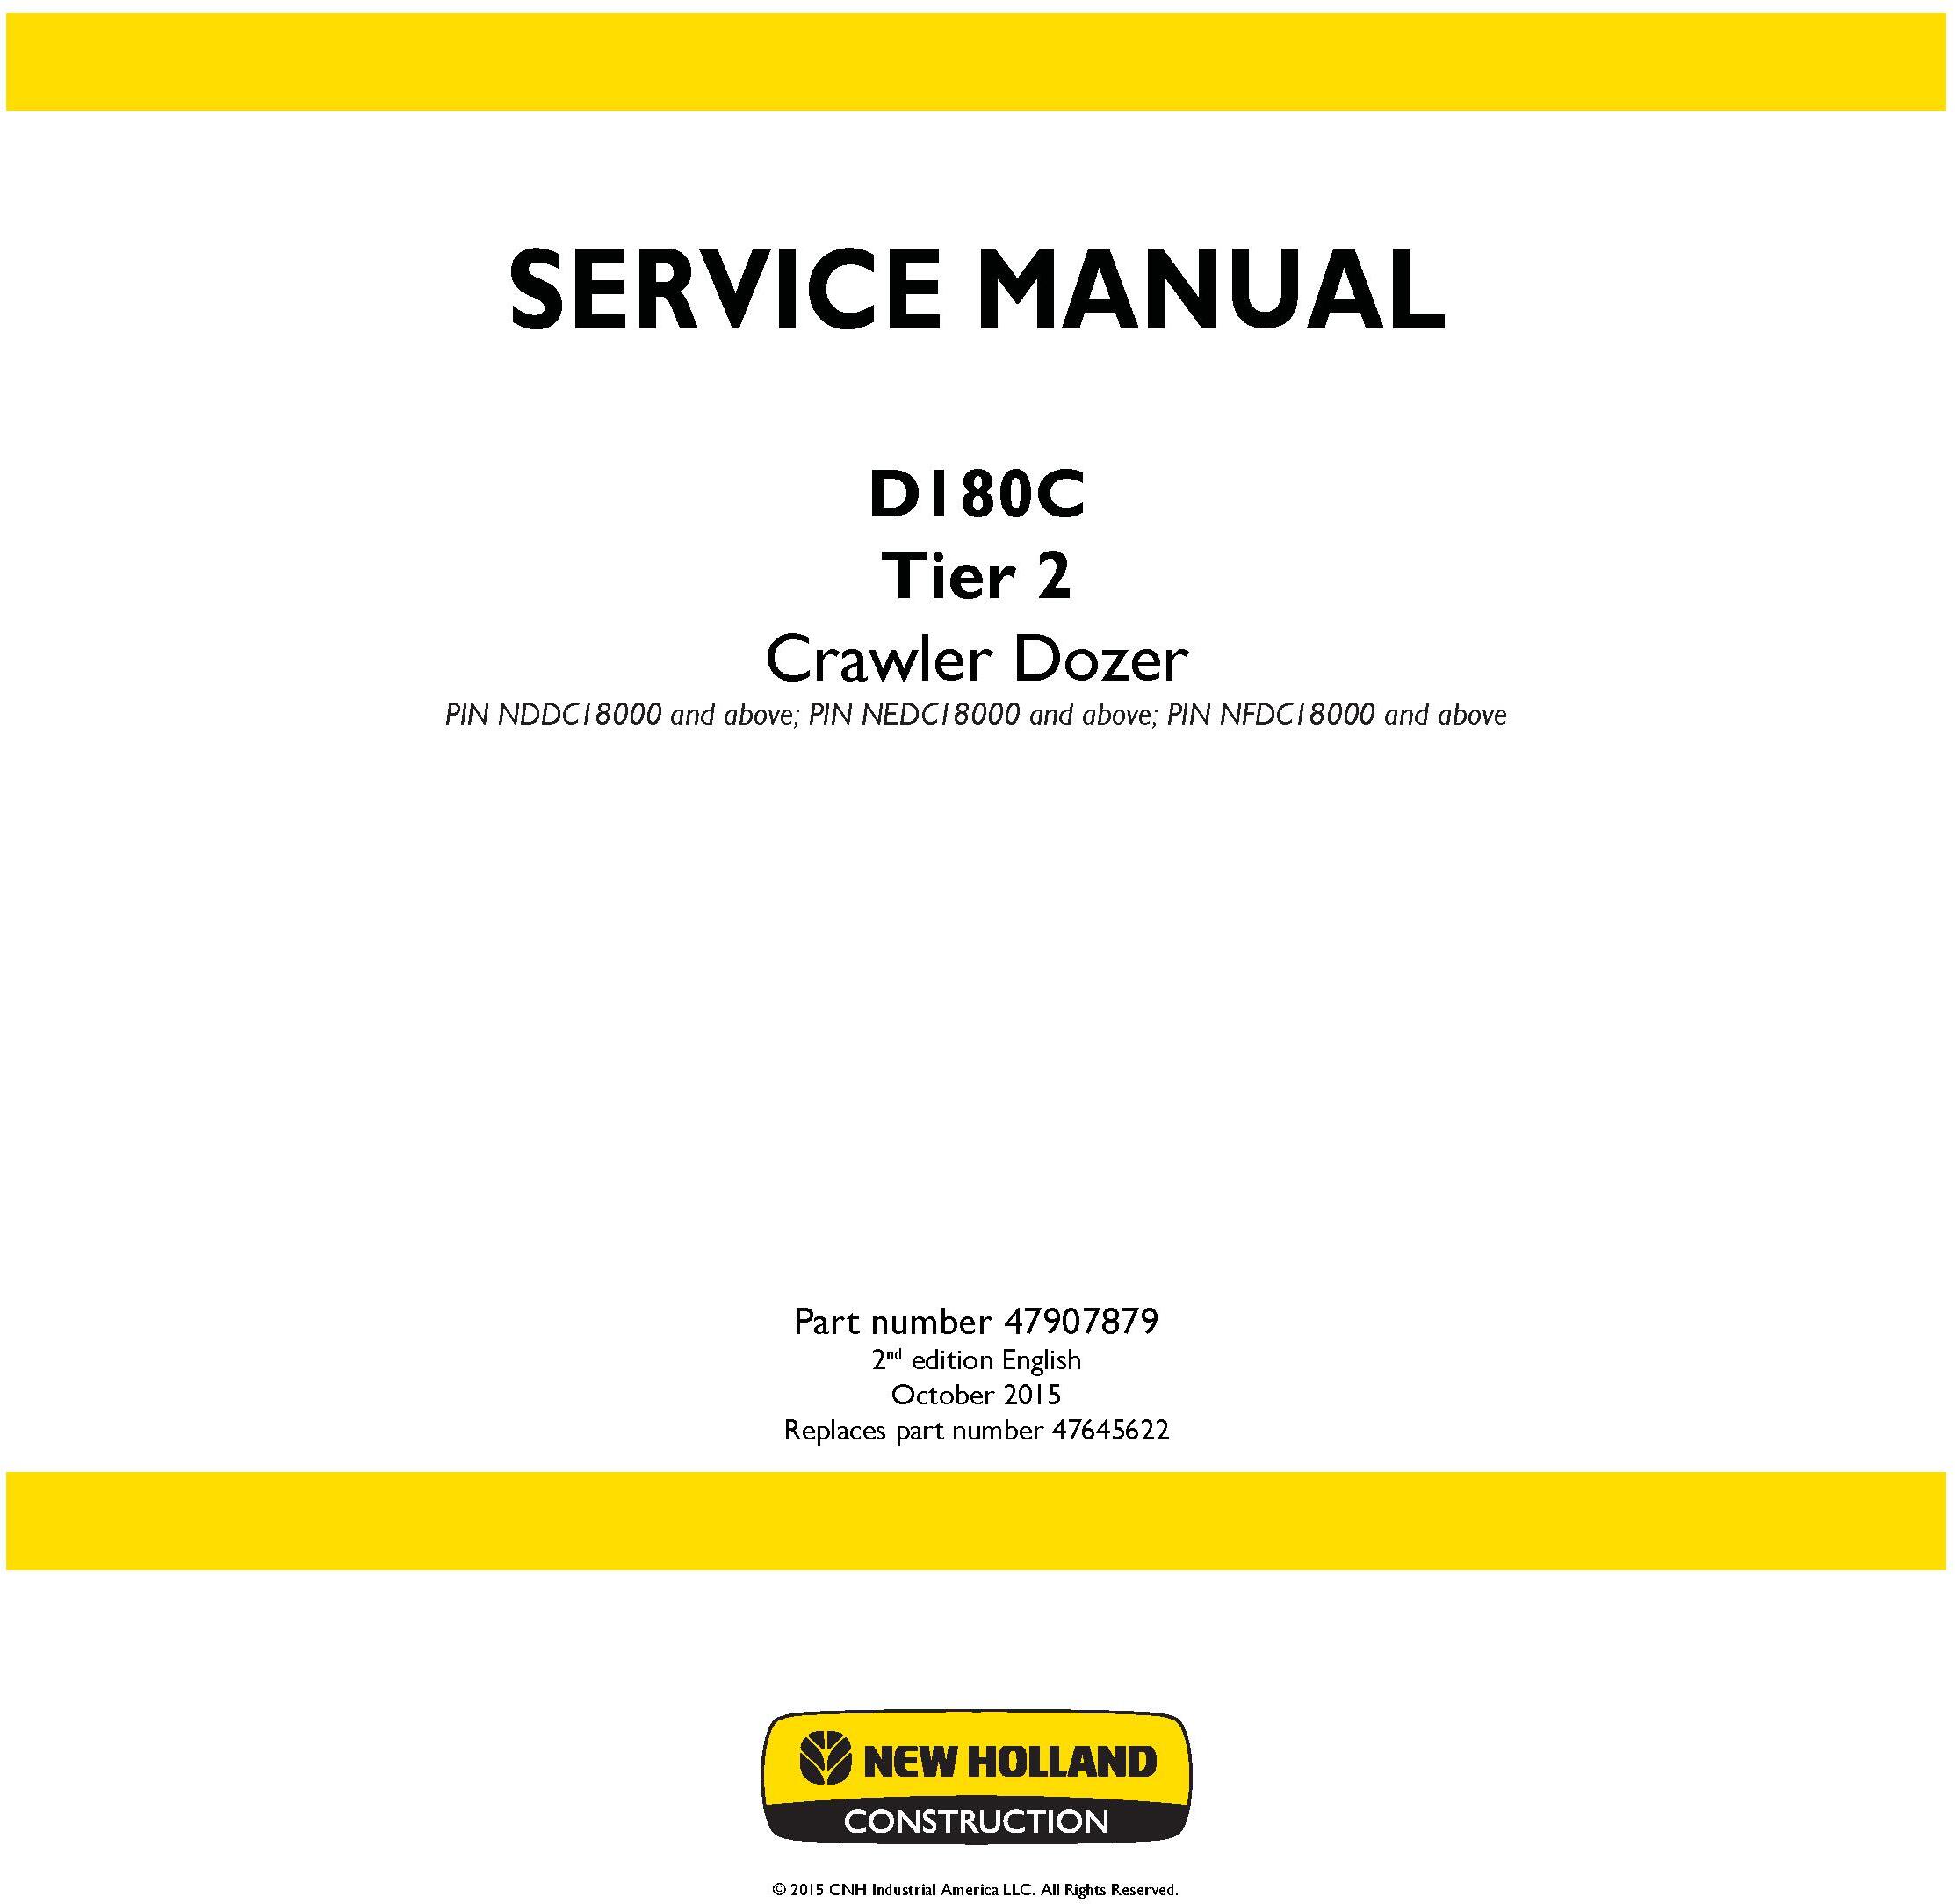 New Holland D180C Tier 2 Crawler dozer Service Manual